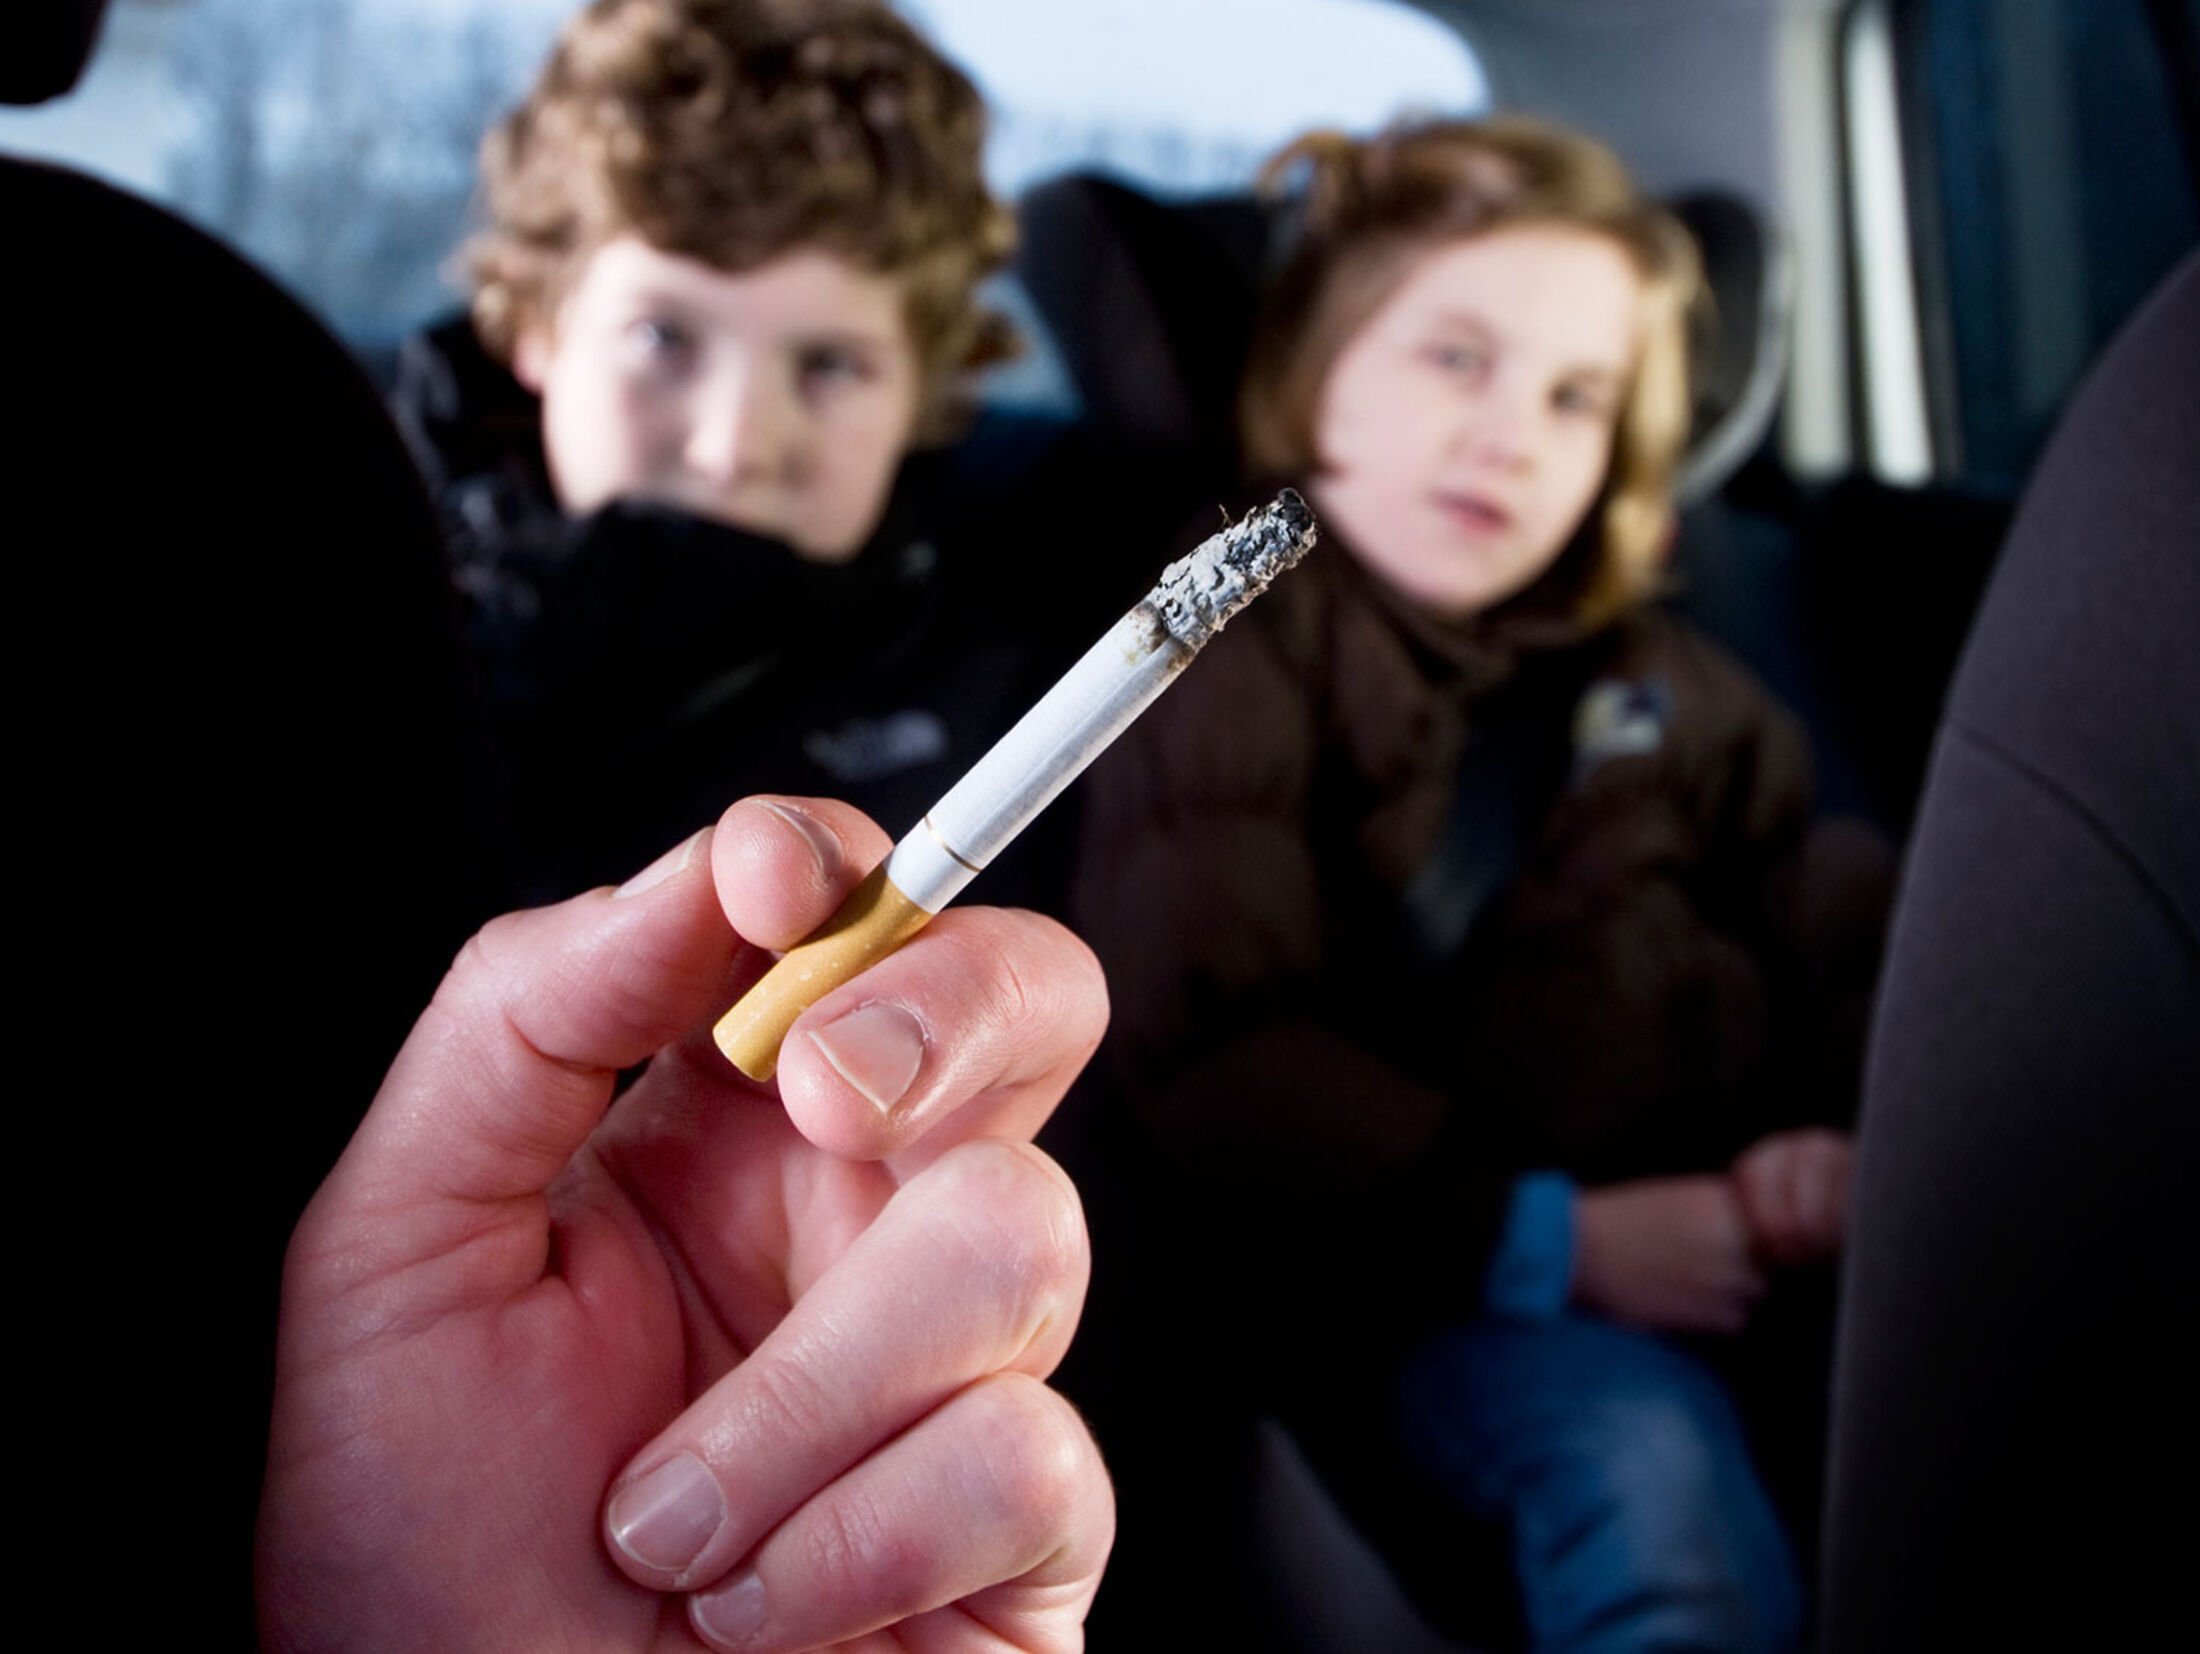 Zigaretten, Cannabis, E-Zigarette: Rauchverbot im Auto